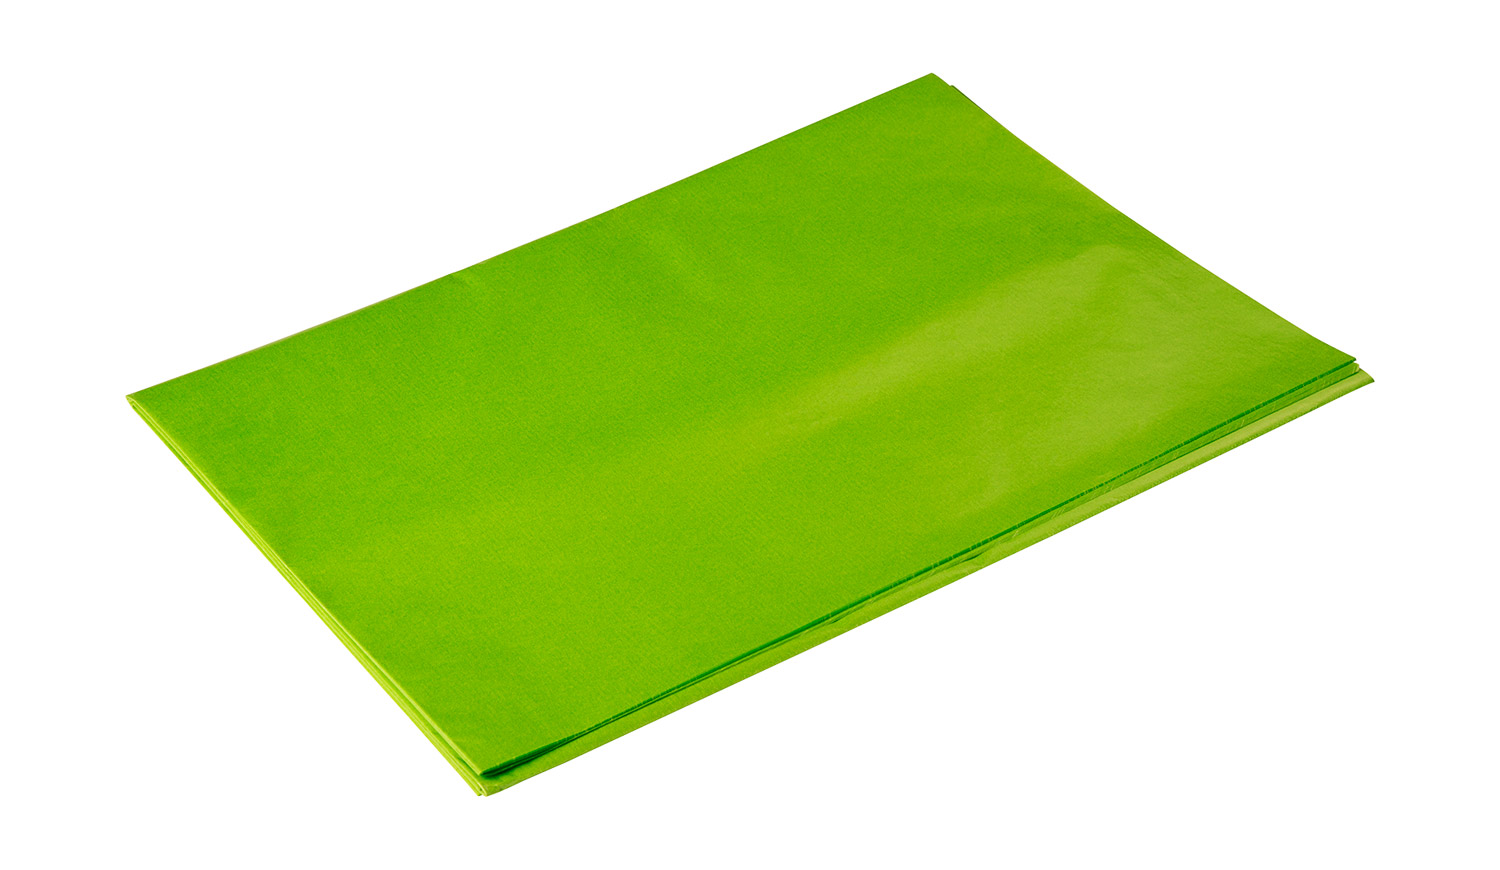 Transparentpapier (Drachenpapier) Einzelfarben hellgrün